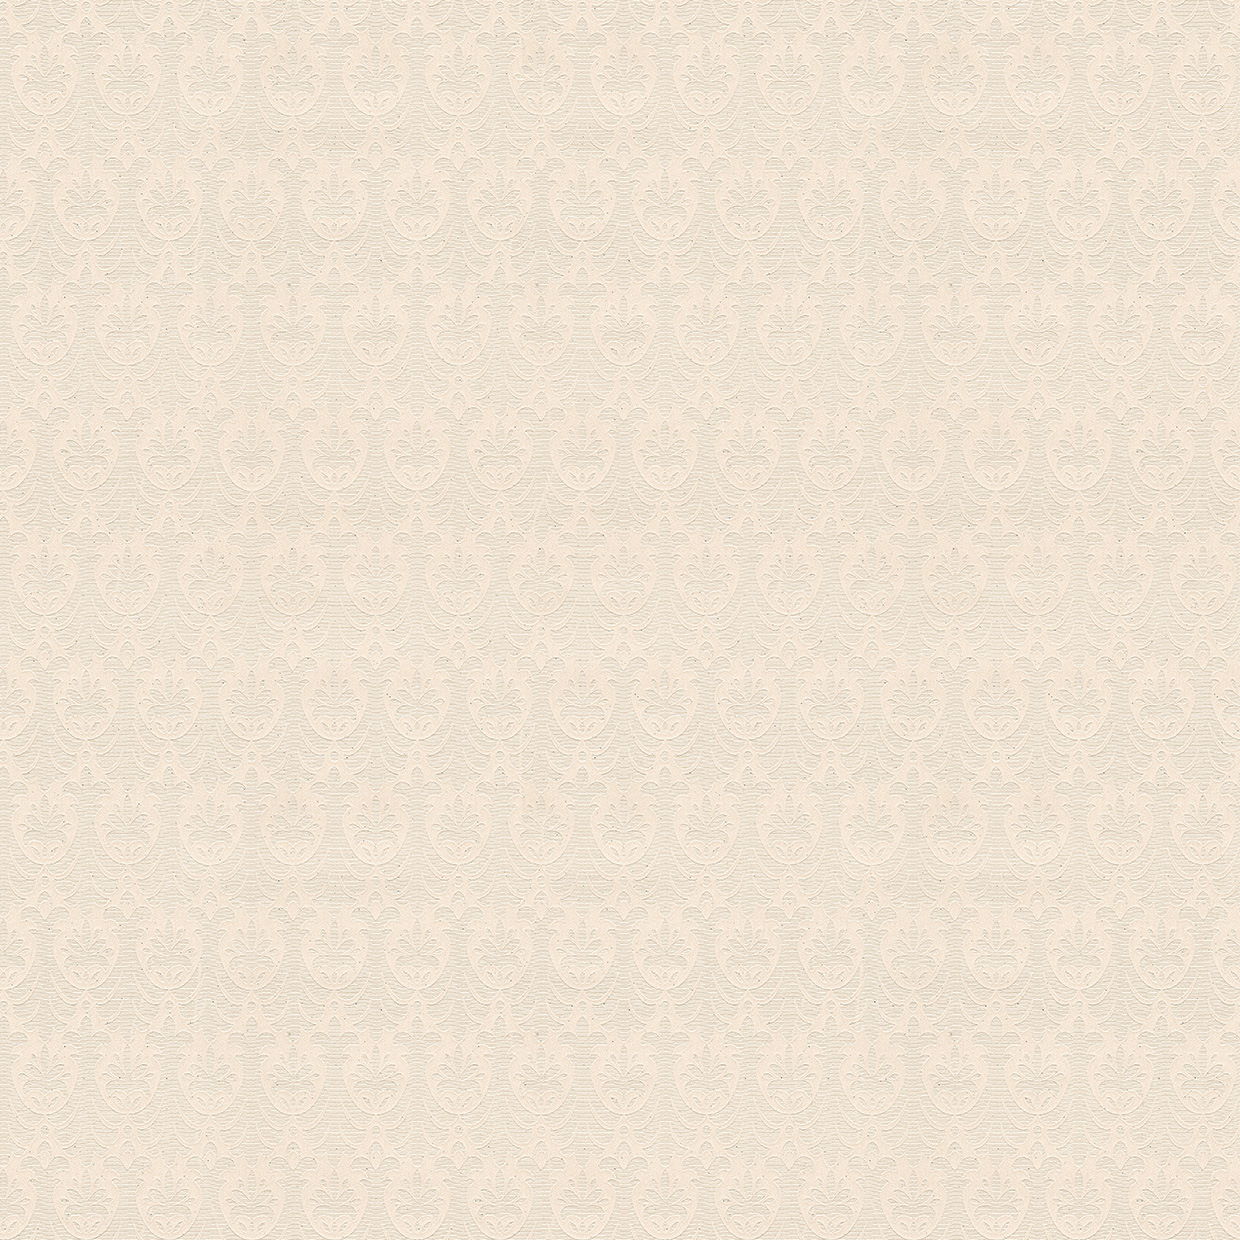 کاغذ دیواری طرح نقش و نگار کد 5084